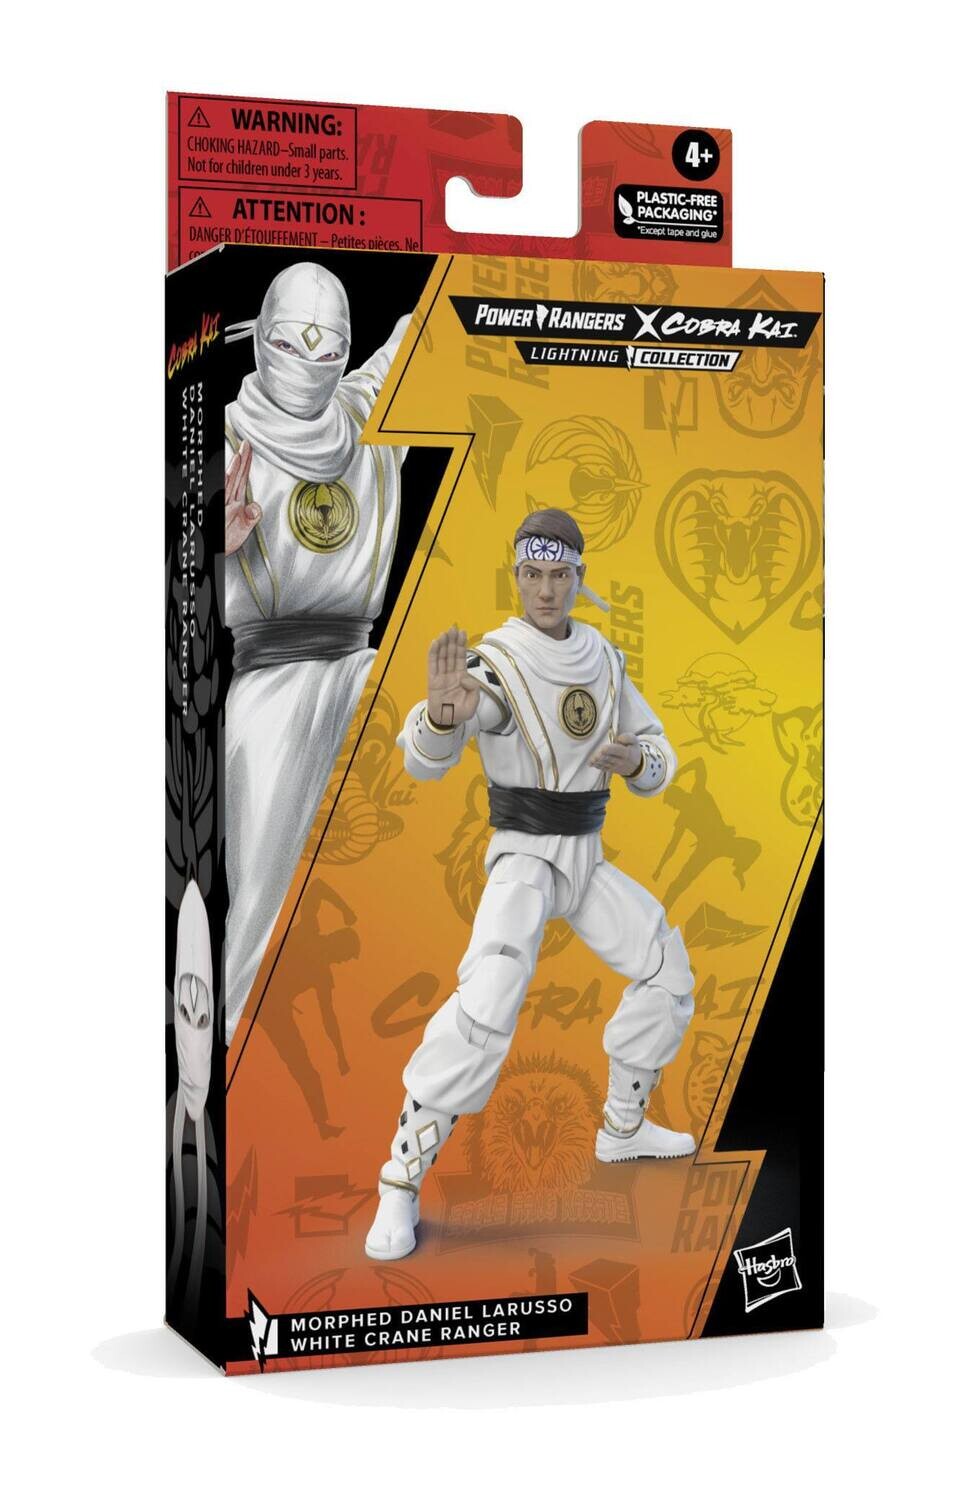 PREORDER: Power Rangers x Cobra Kai Ligtning Collection Action Figure Morphed Daniel LaRusso White Crane Ranger 15 cm